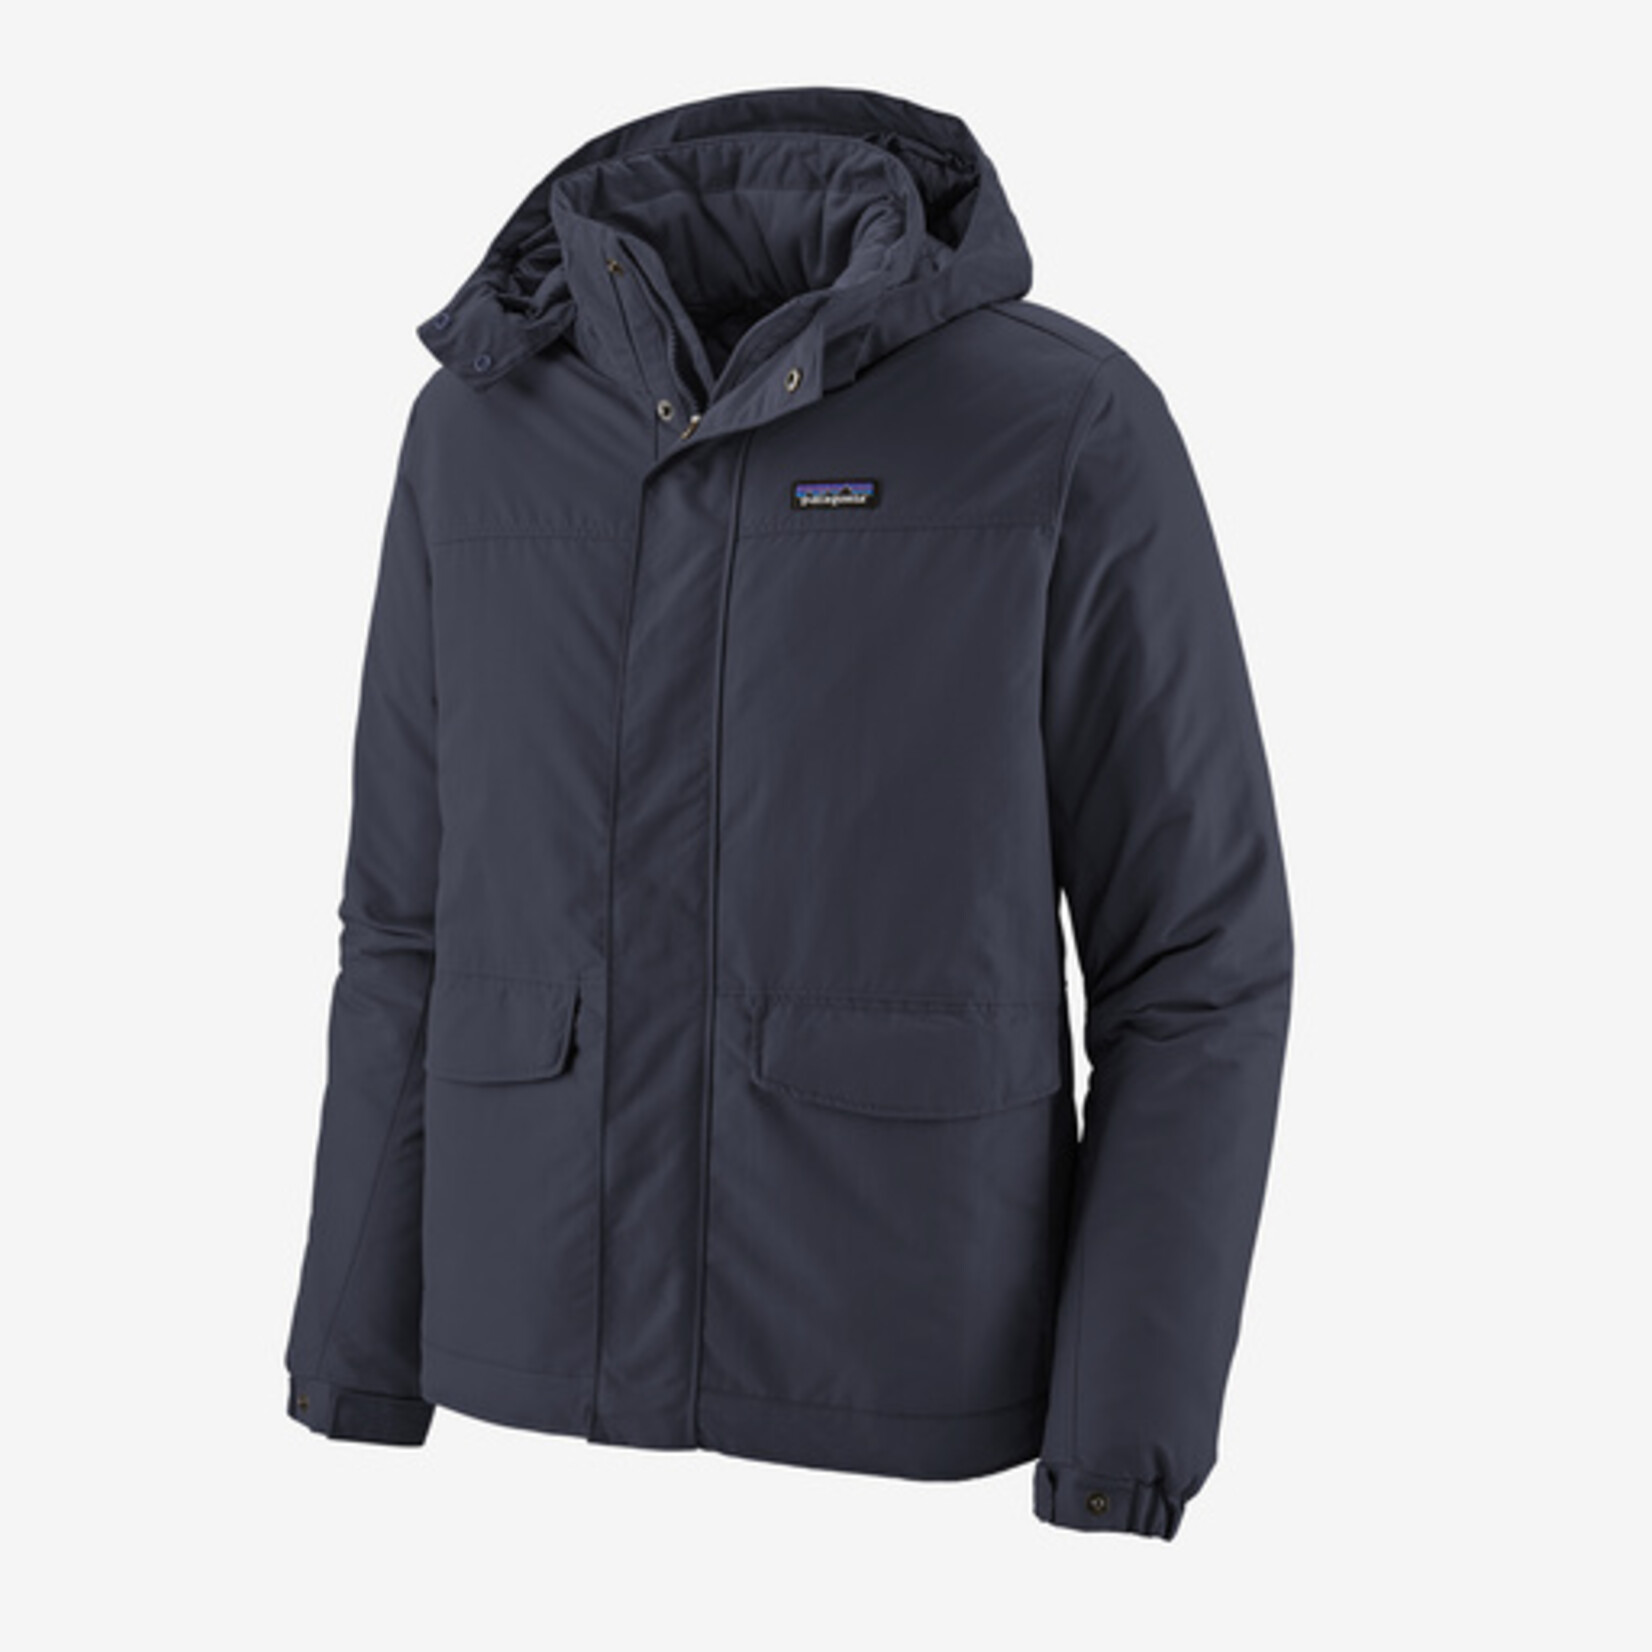 Patagonia M’s isthmus jacket